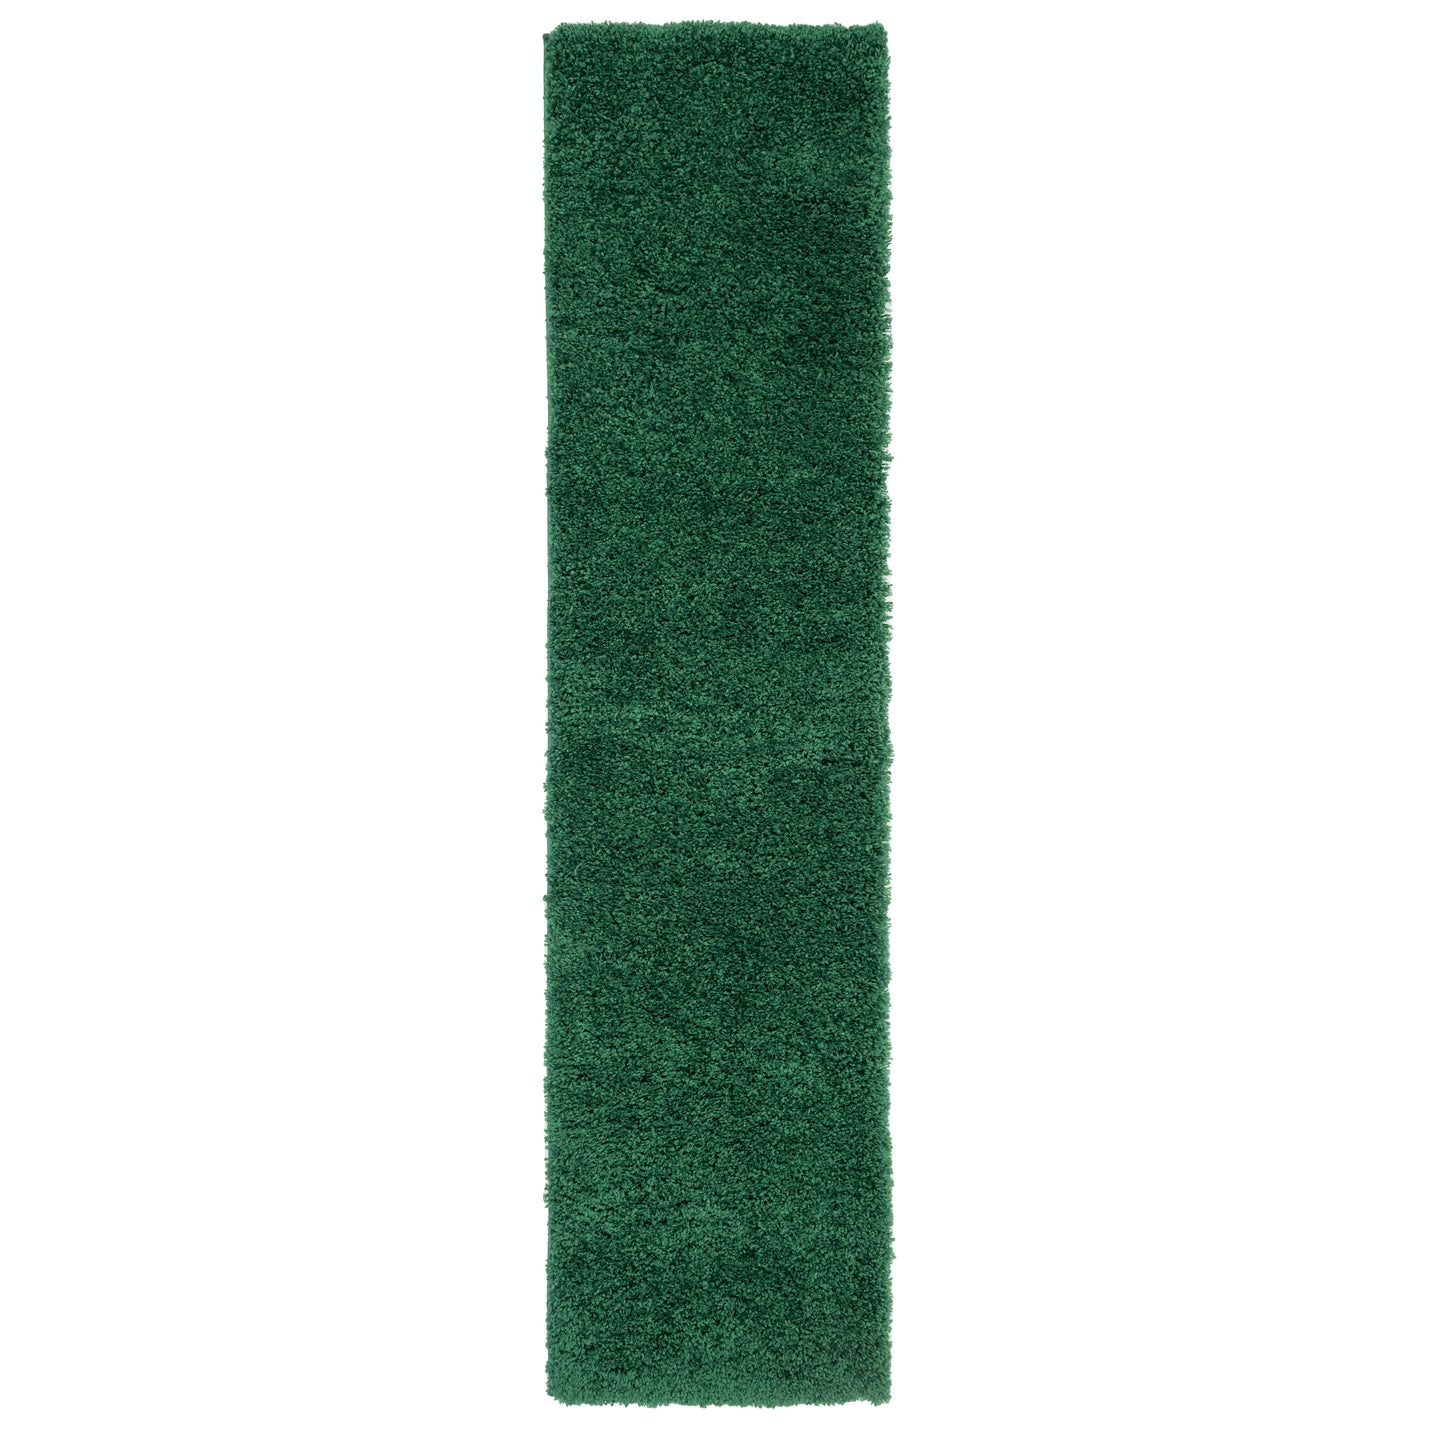 Super Soft Luxury Dark Green Shaggy Rug